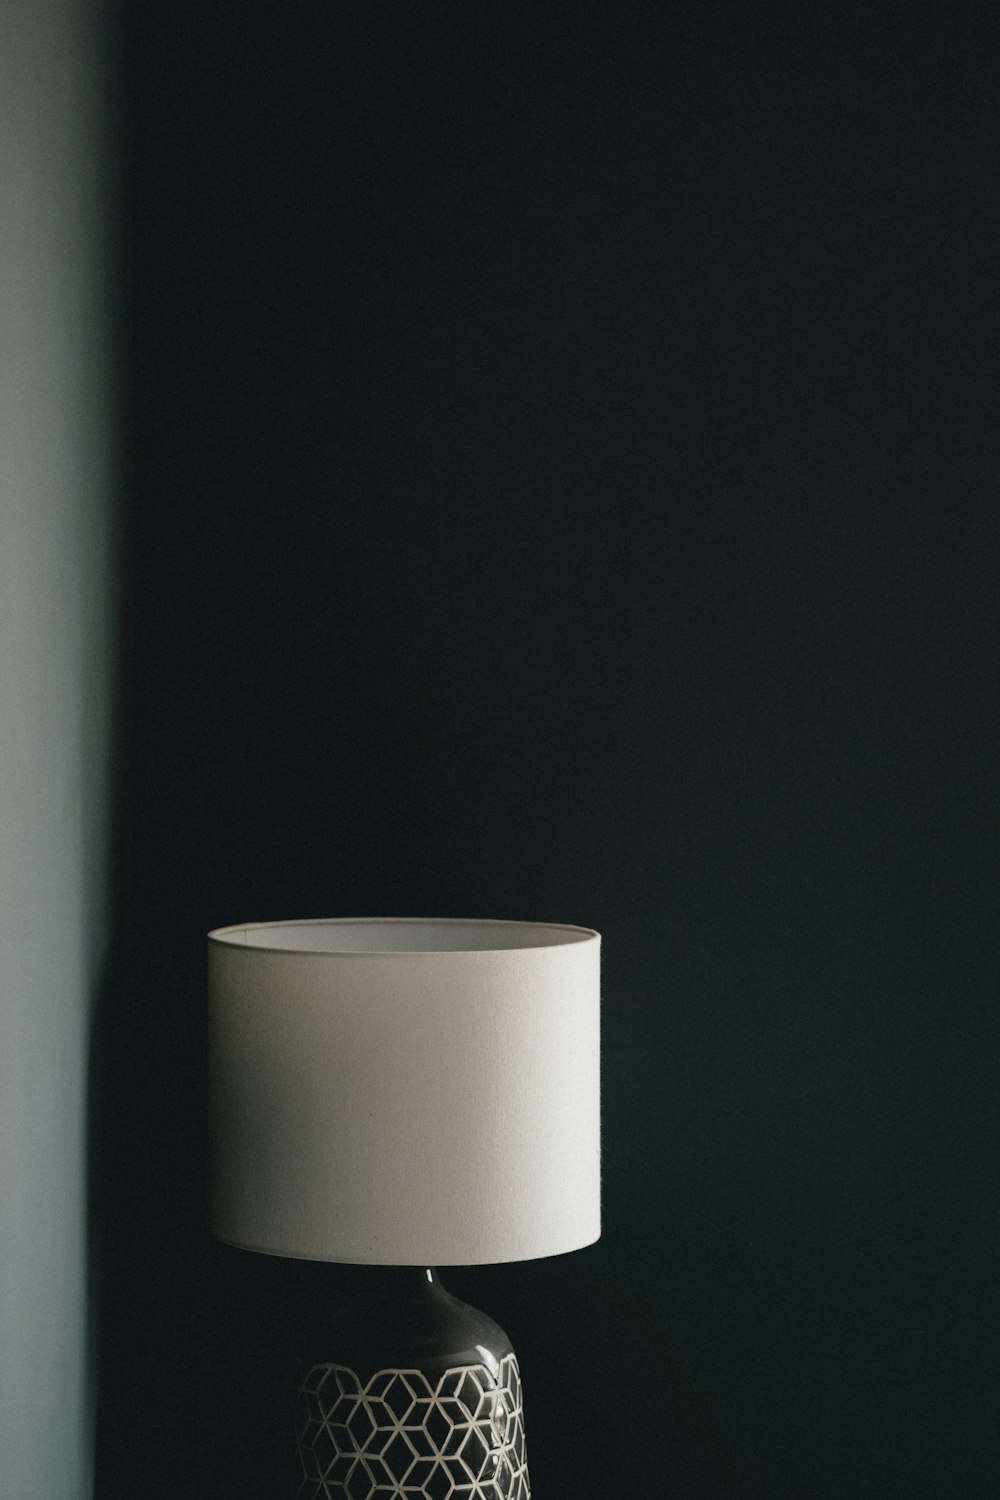 white toilet paper roll on black table photo – Free Lamp Image on Unsplash